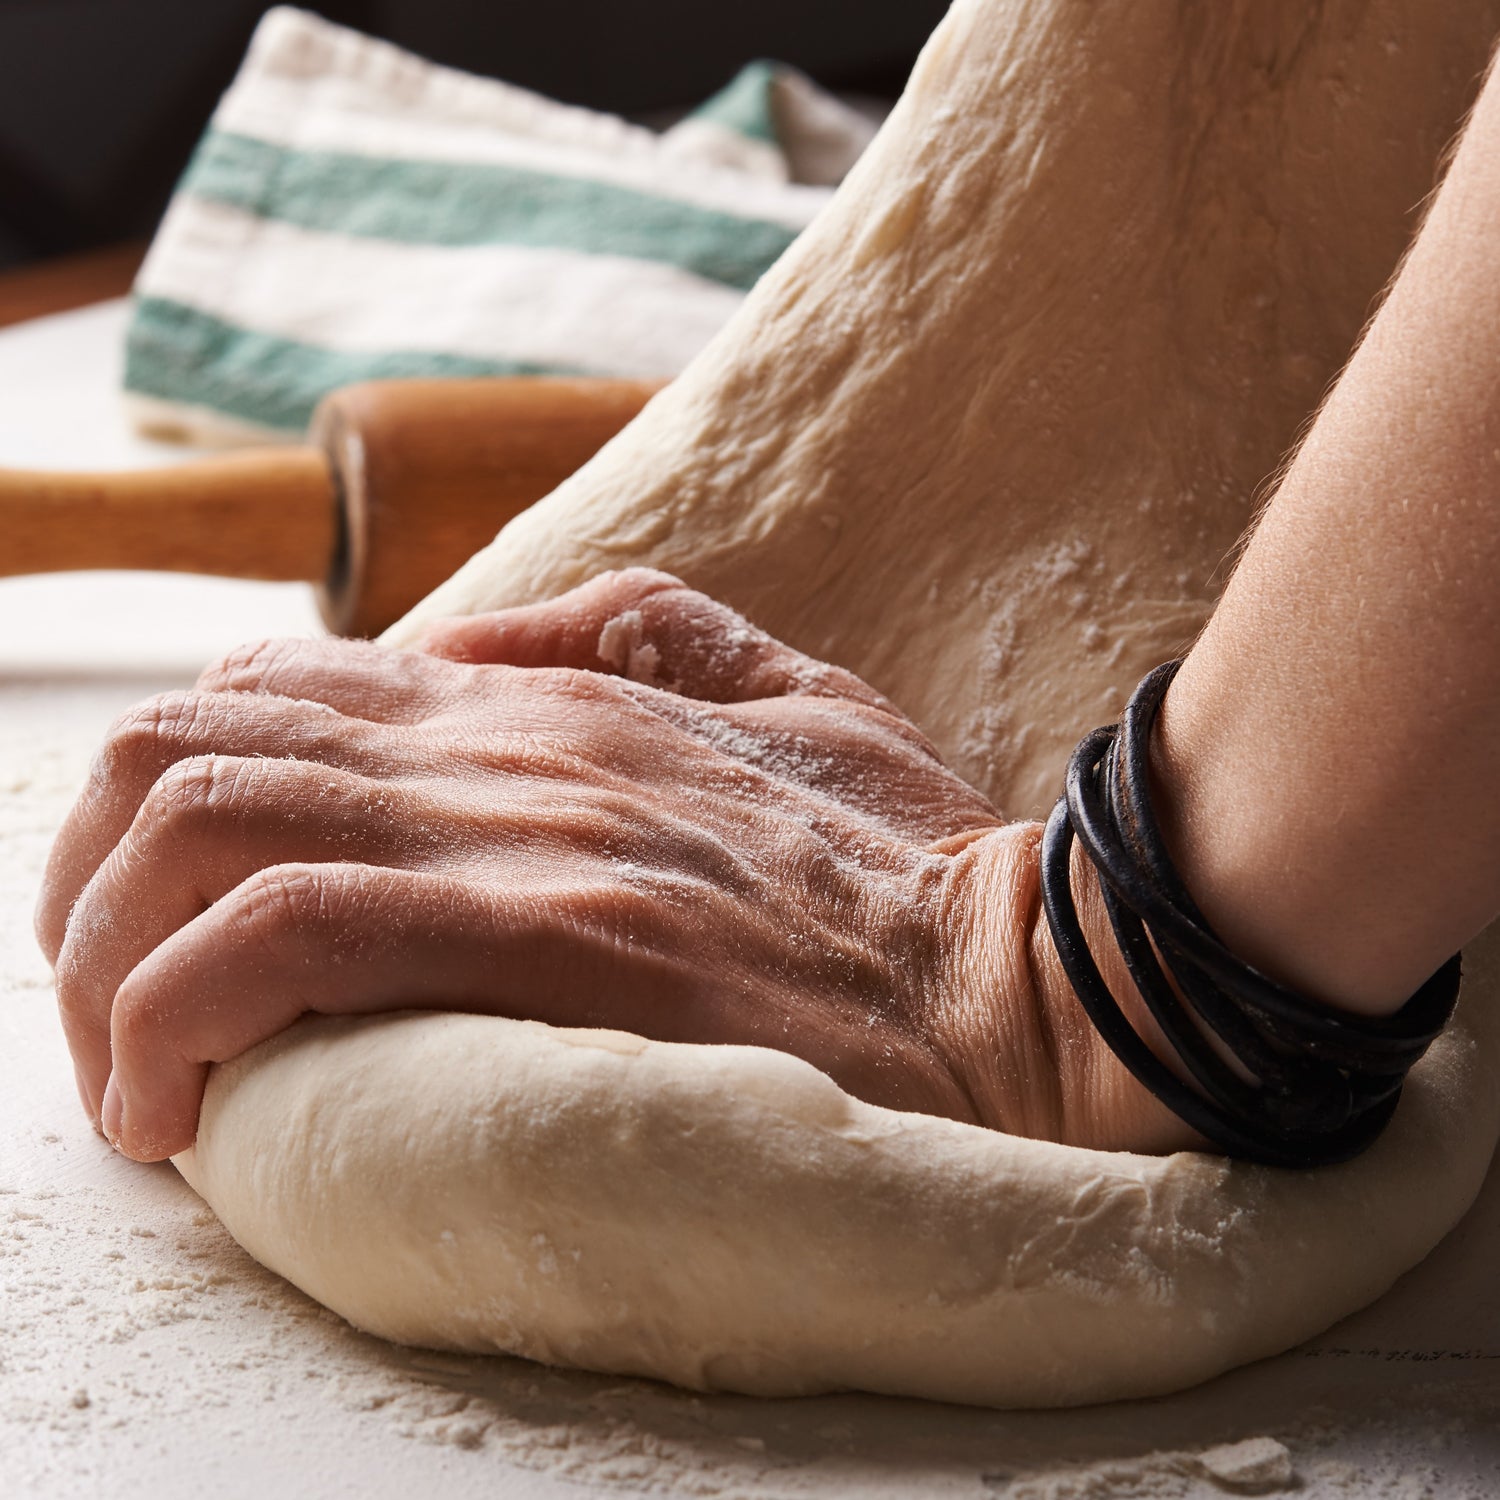 https://cdn.outsideonline.com/wp-content/uploads/2020/03/26/bread-making-corona_s.jpg